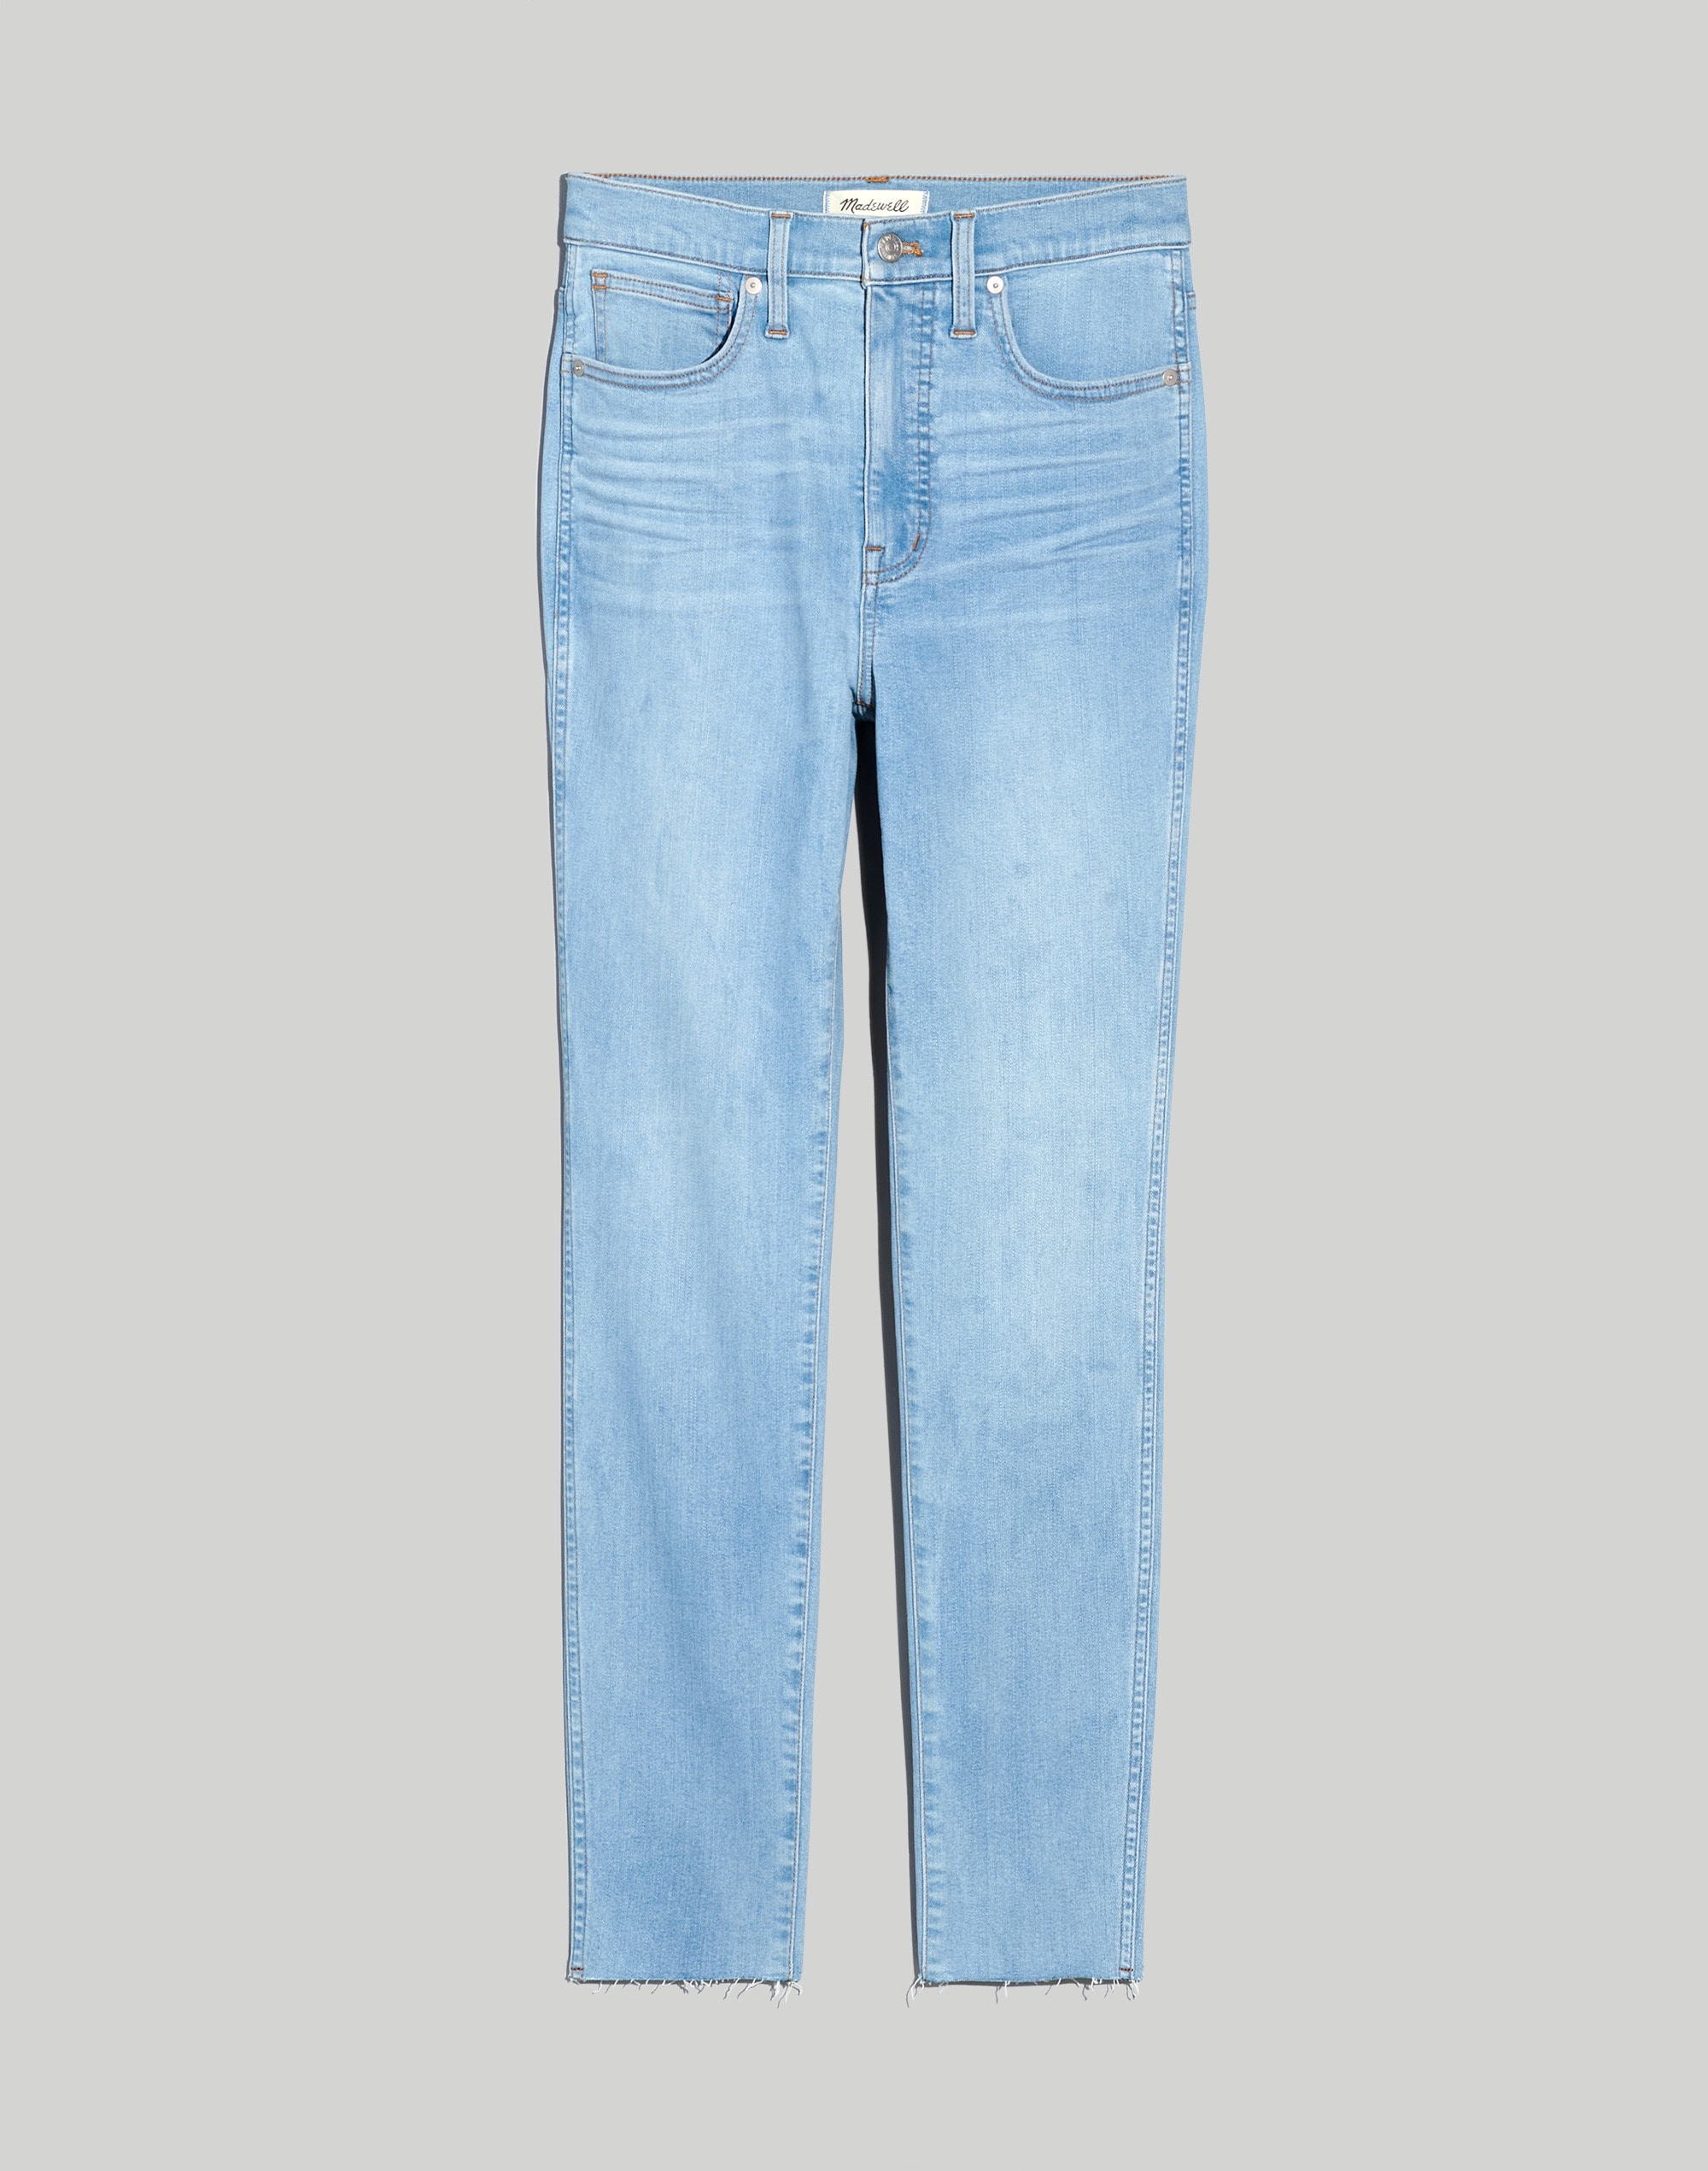 Plus 10" High-Rise Skinny Crop Jeans Charlemont Wash